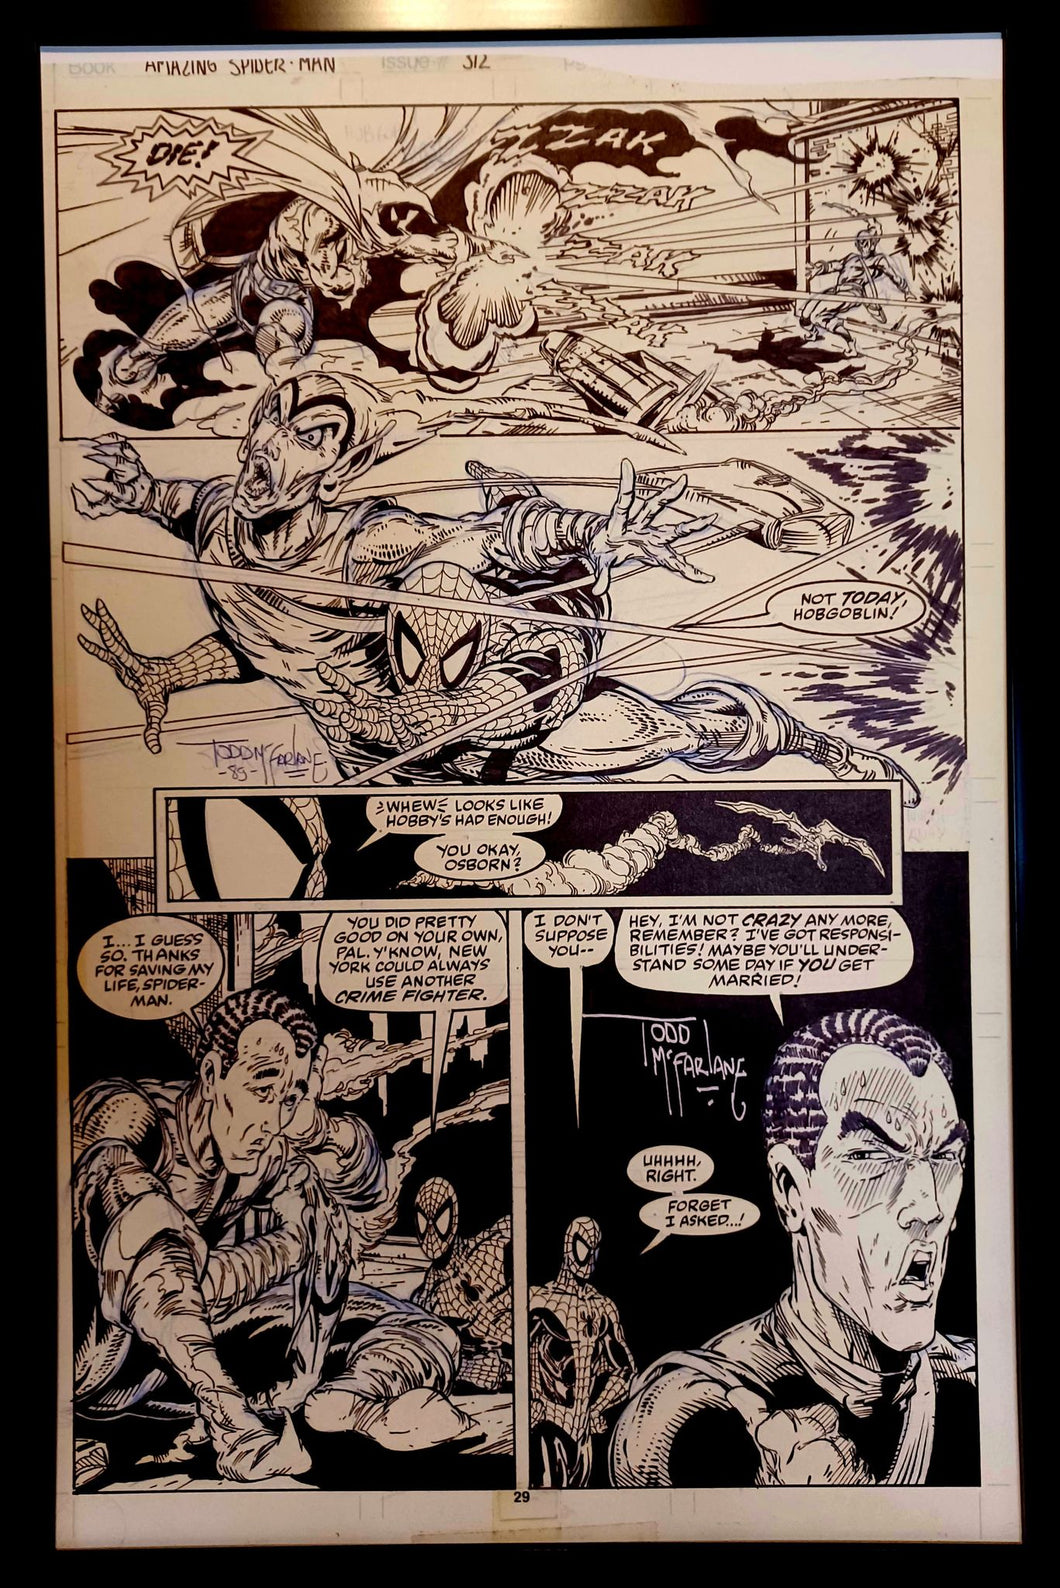 Amazing Spider-Man #312 pg. 21 by Todd McFarlane 11x17 FRAMED Original Art Print Comic Poster